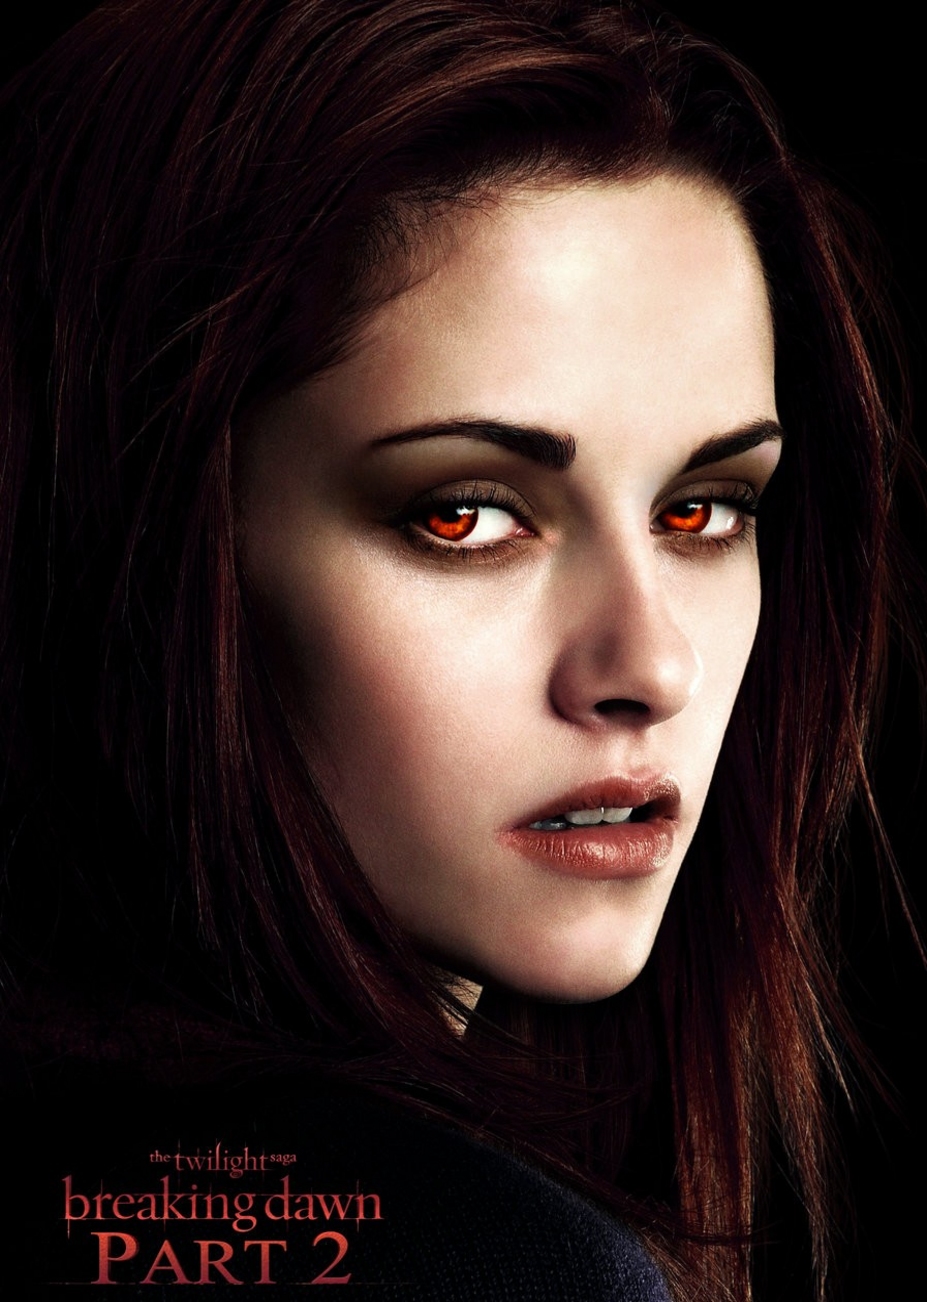 The Twilight Saga: Breaking Dawn - Part 2 - Movie Poster #3 (Original)